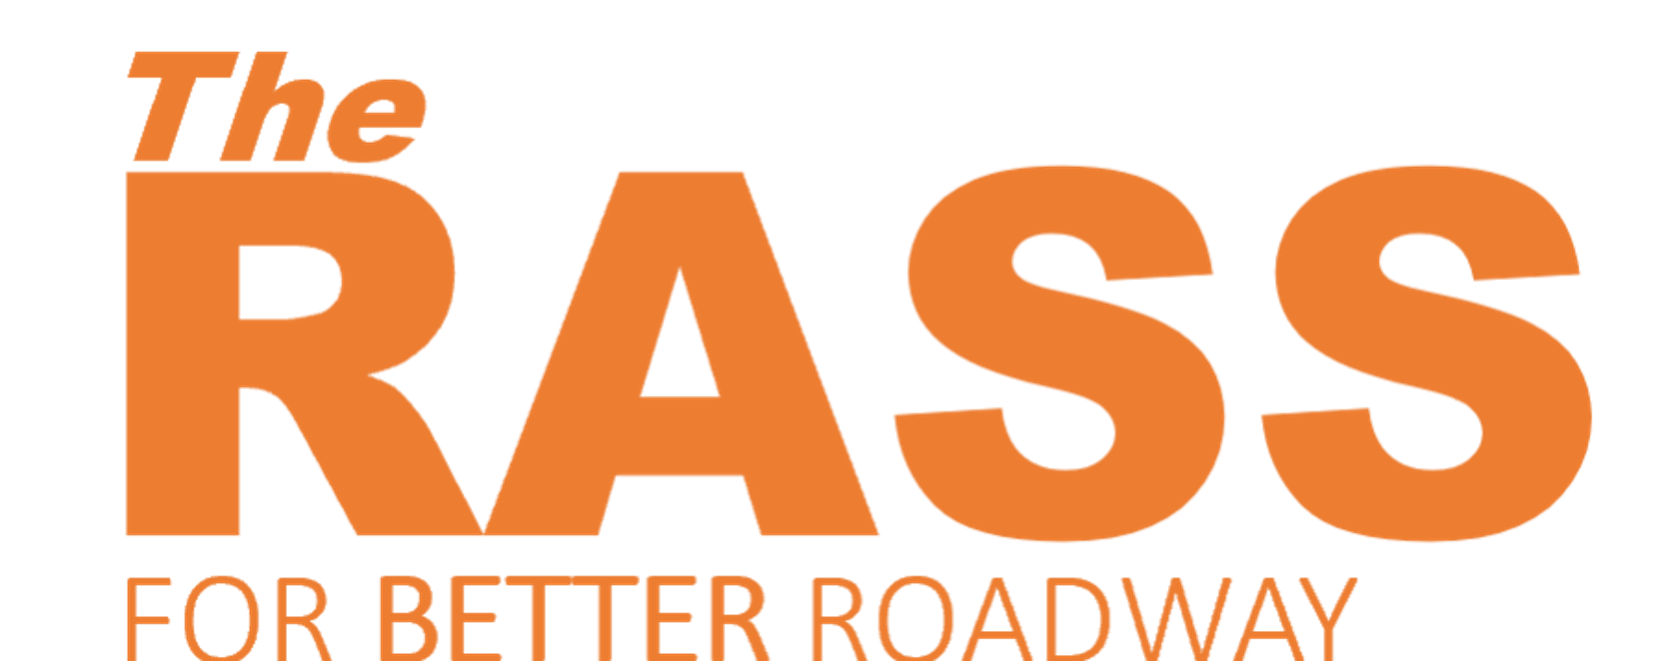 RASS logo